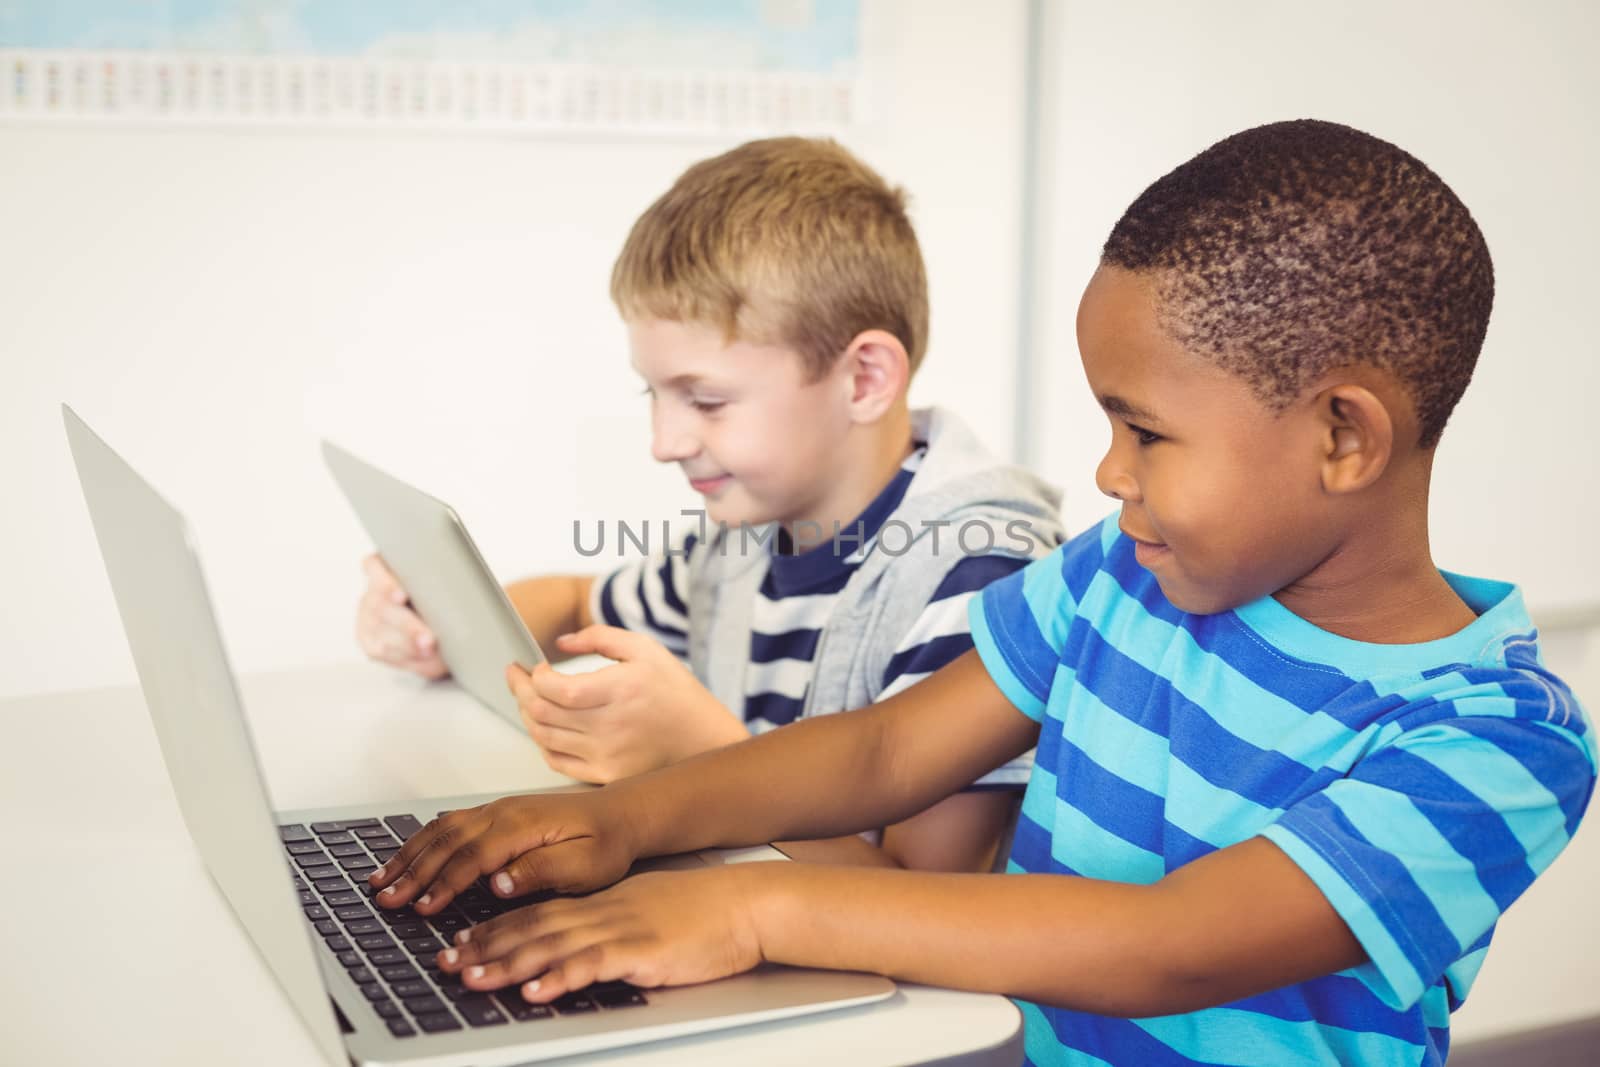 School kids using a laptop and digital tablet in classroom by Wavebreakmedia